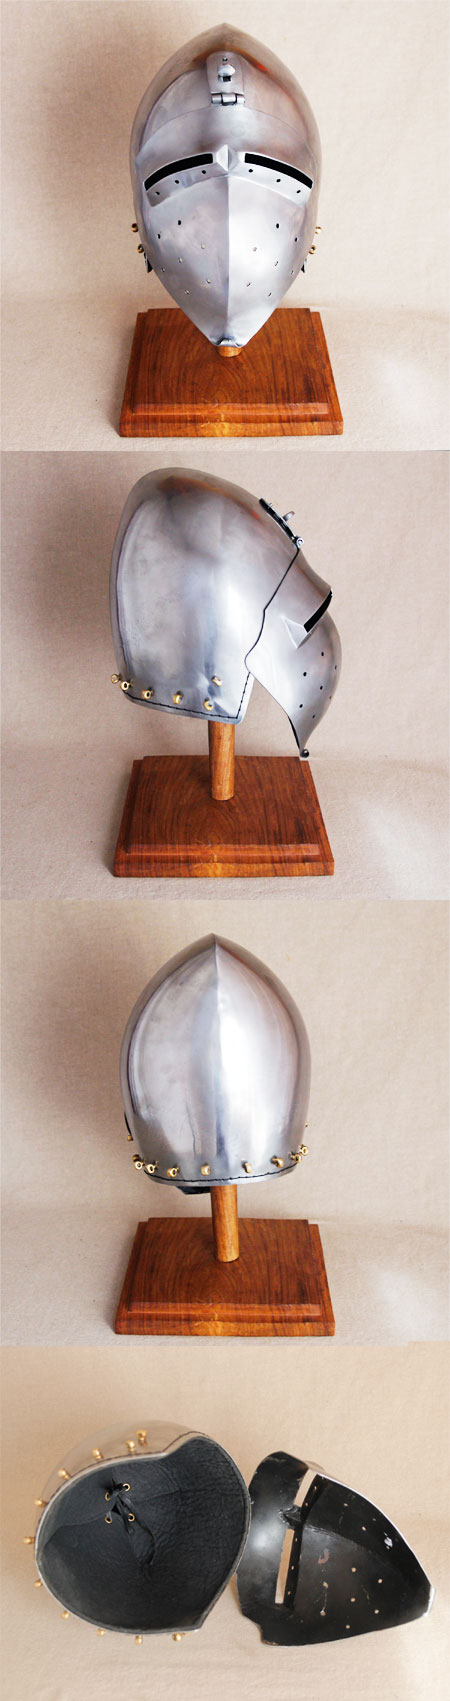 Bascinet helmet with visor, 14th century, size L